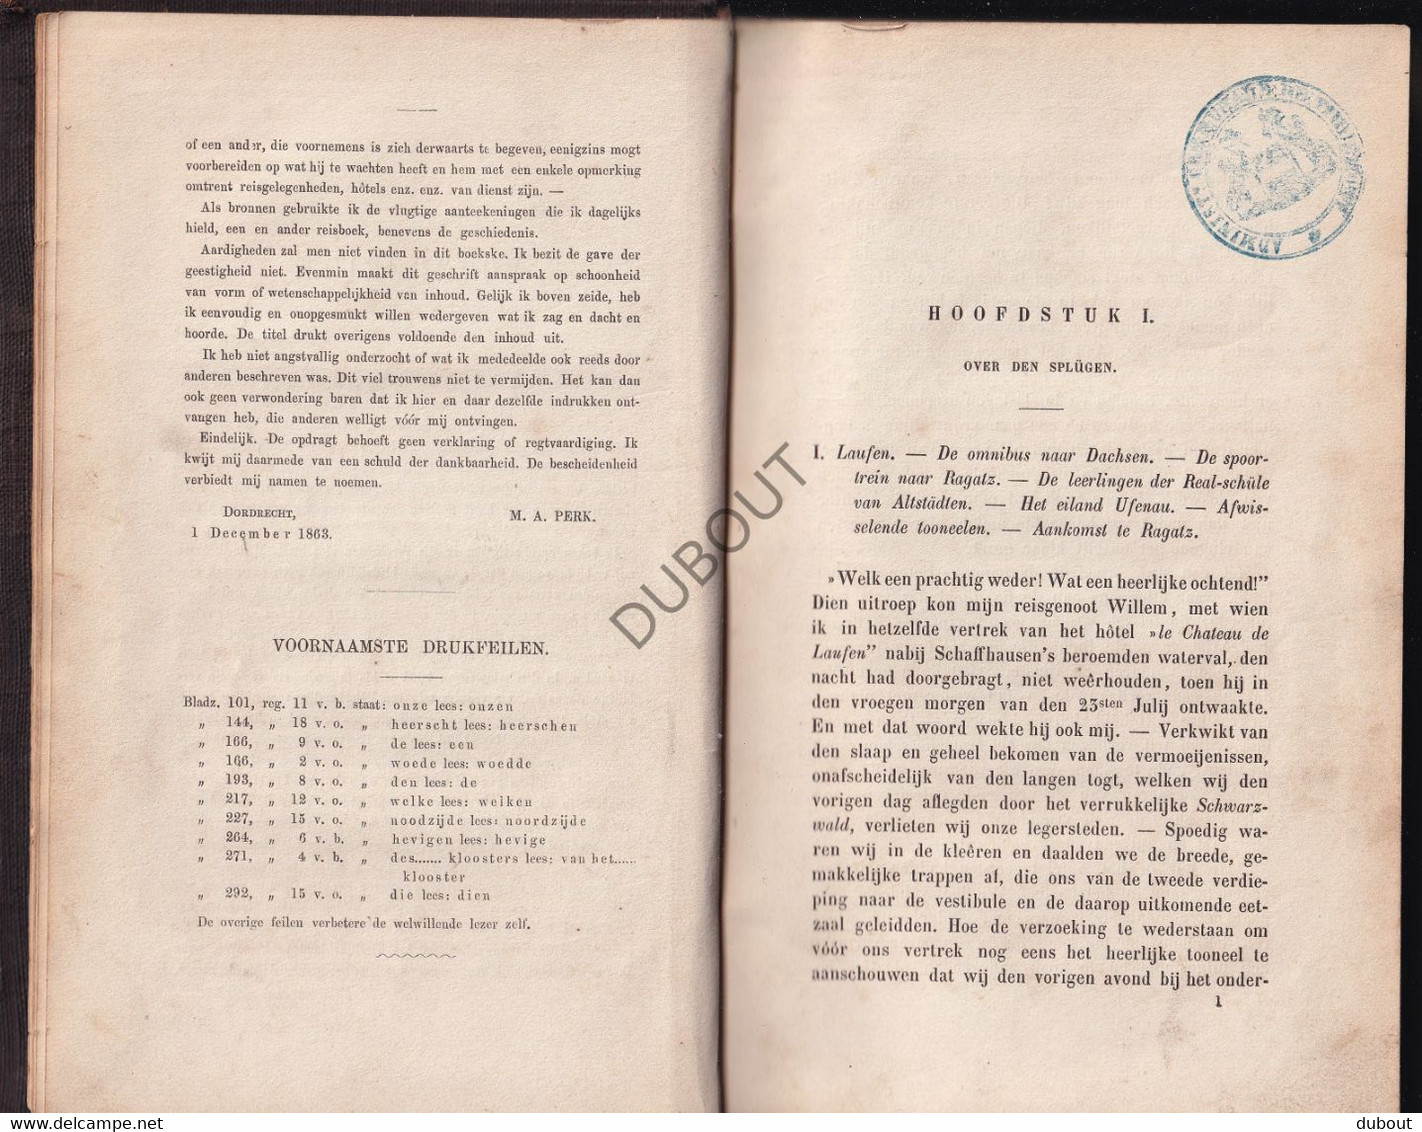 Italië/Dordrecht - Uit Opper-Italië - 1864 - Reisverhaal, Auteur: M.A. Perk, Predikant Te Dordrecht  (S297) - Oud